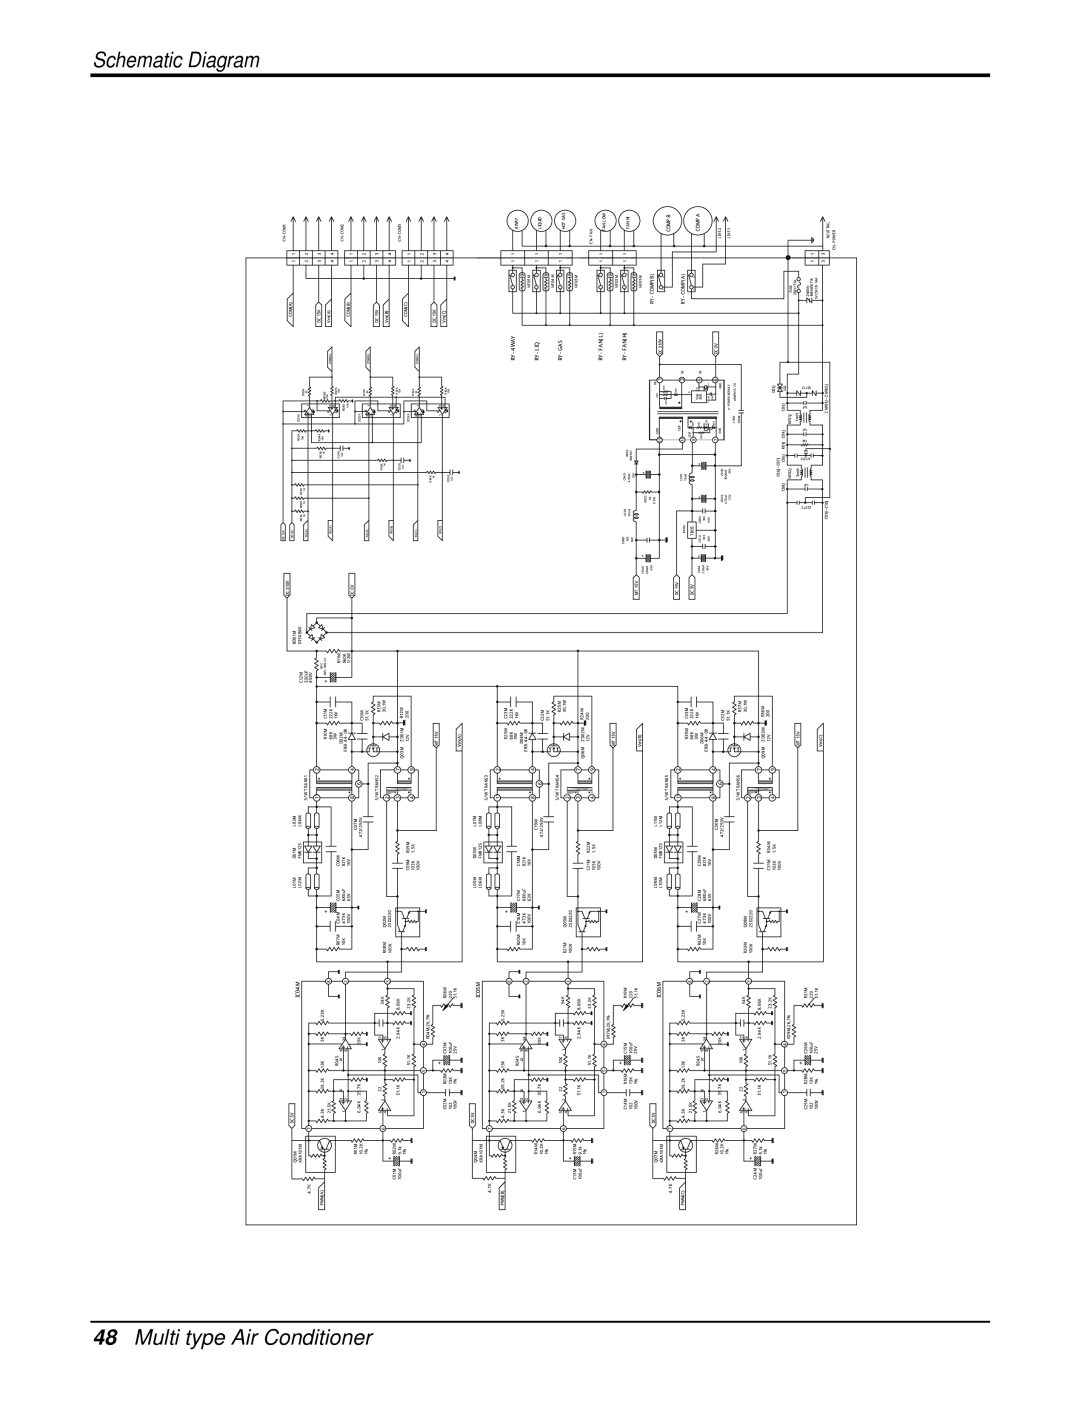 Heat Controller DMH18DB-1 manual Multi type Air Conditioner, Schematic Diagram 